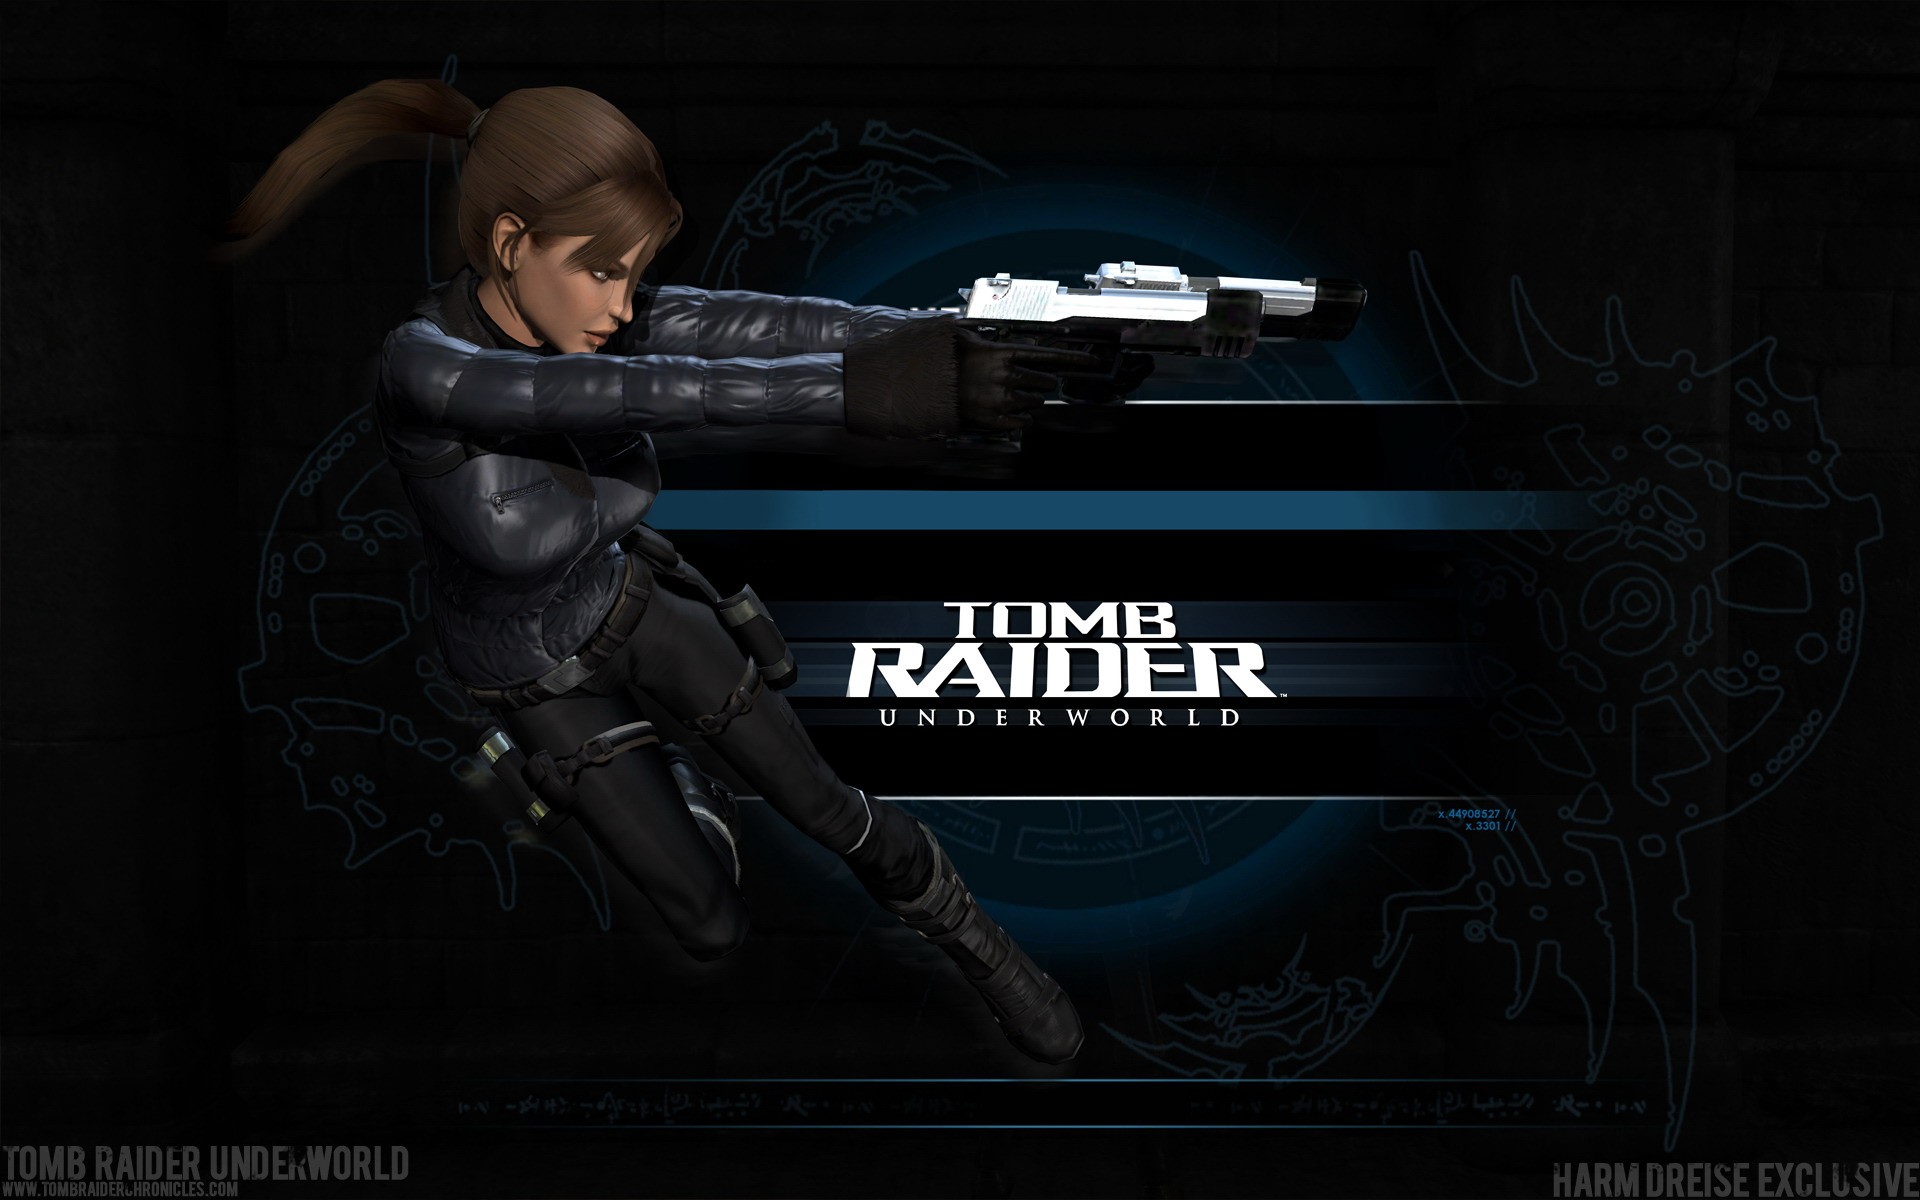 Lara Croft Tomb Raider 8 Underworld #7 - 1920x1200